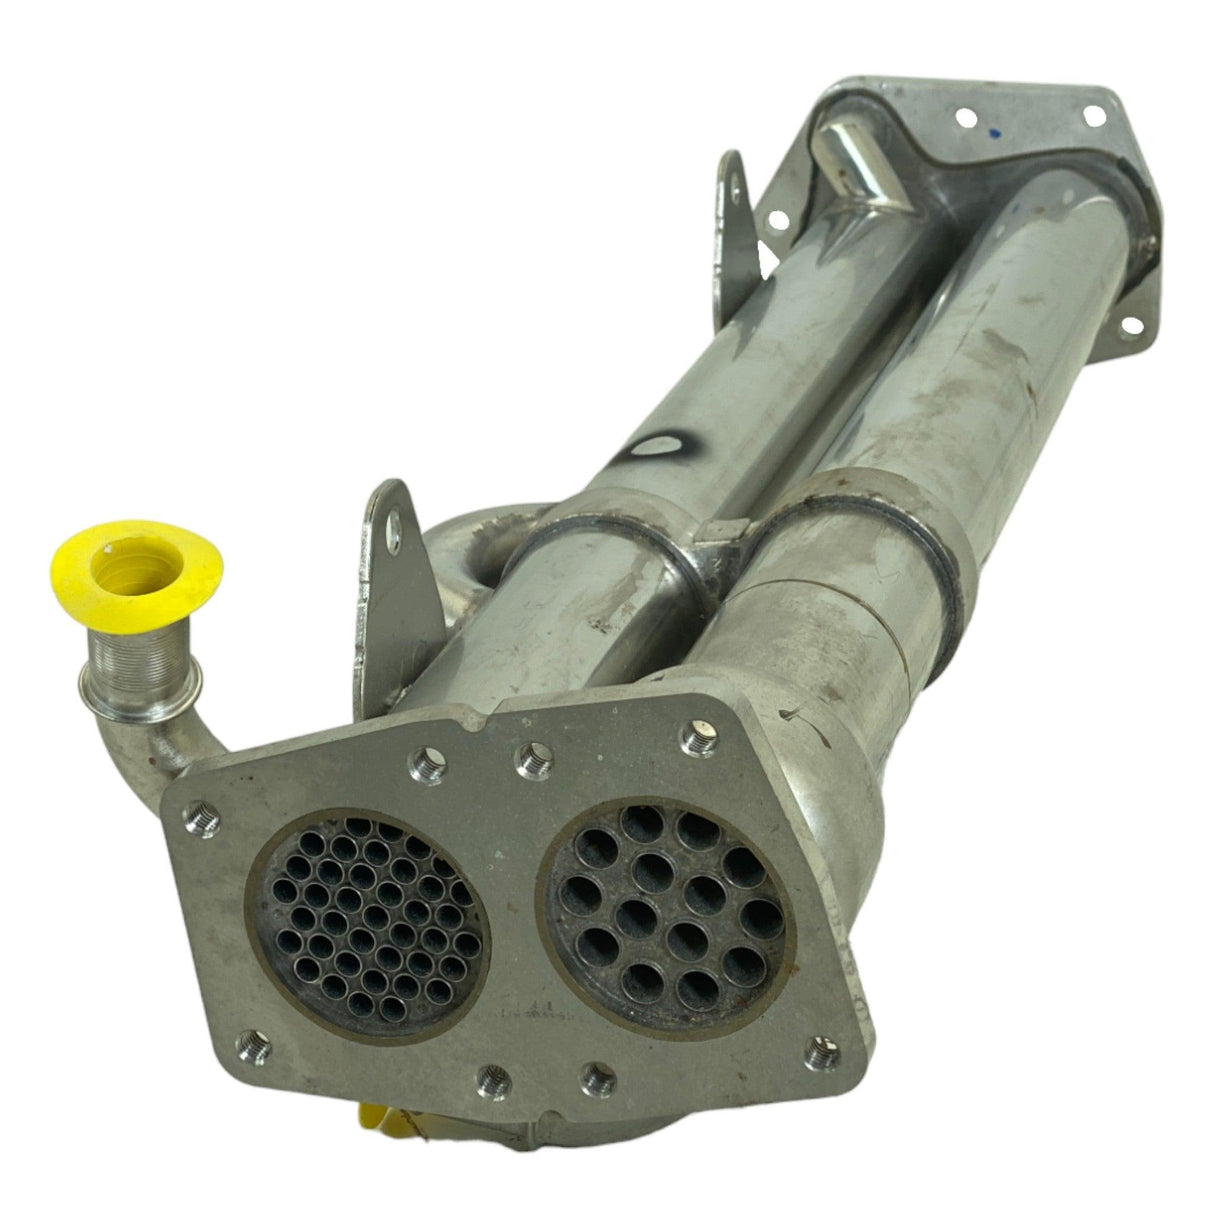 A09061421179 Genuine Detroit Diesel EGR Exhaust Gas Recirculation Cooler